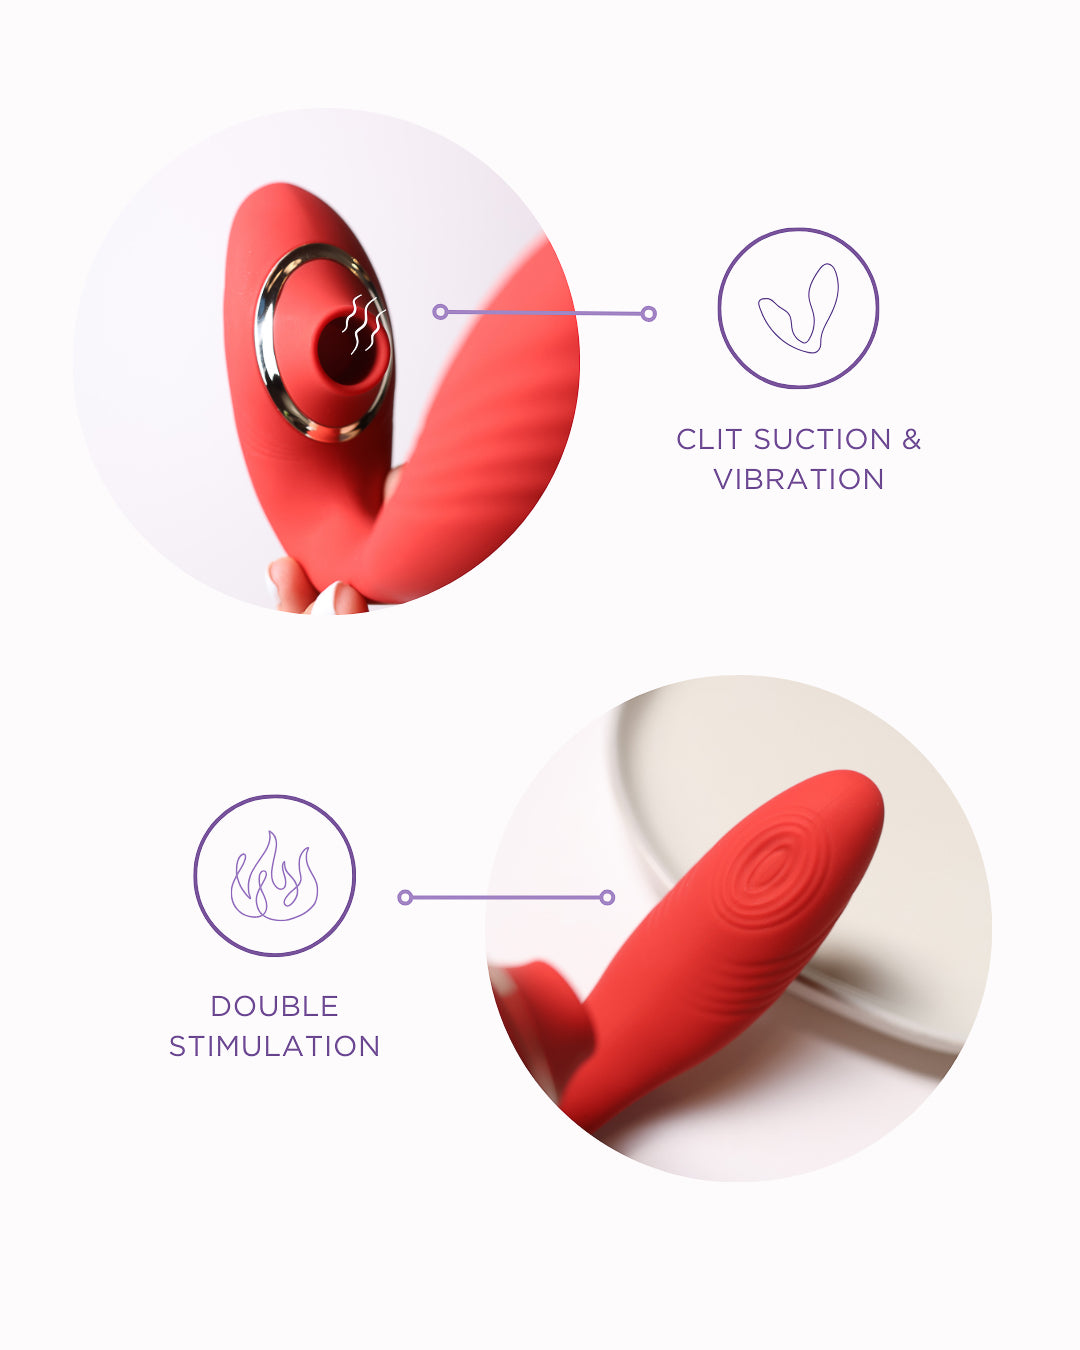 The Nympho Pulse Pro / Sucking Vibrator